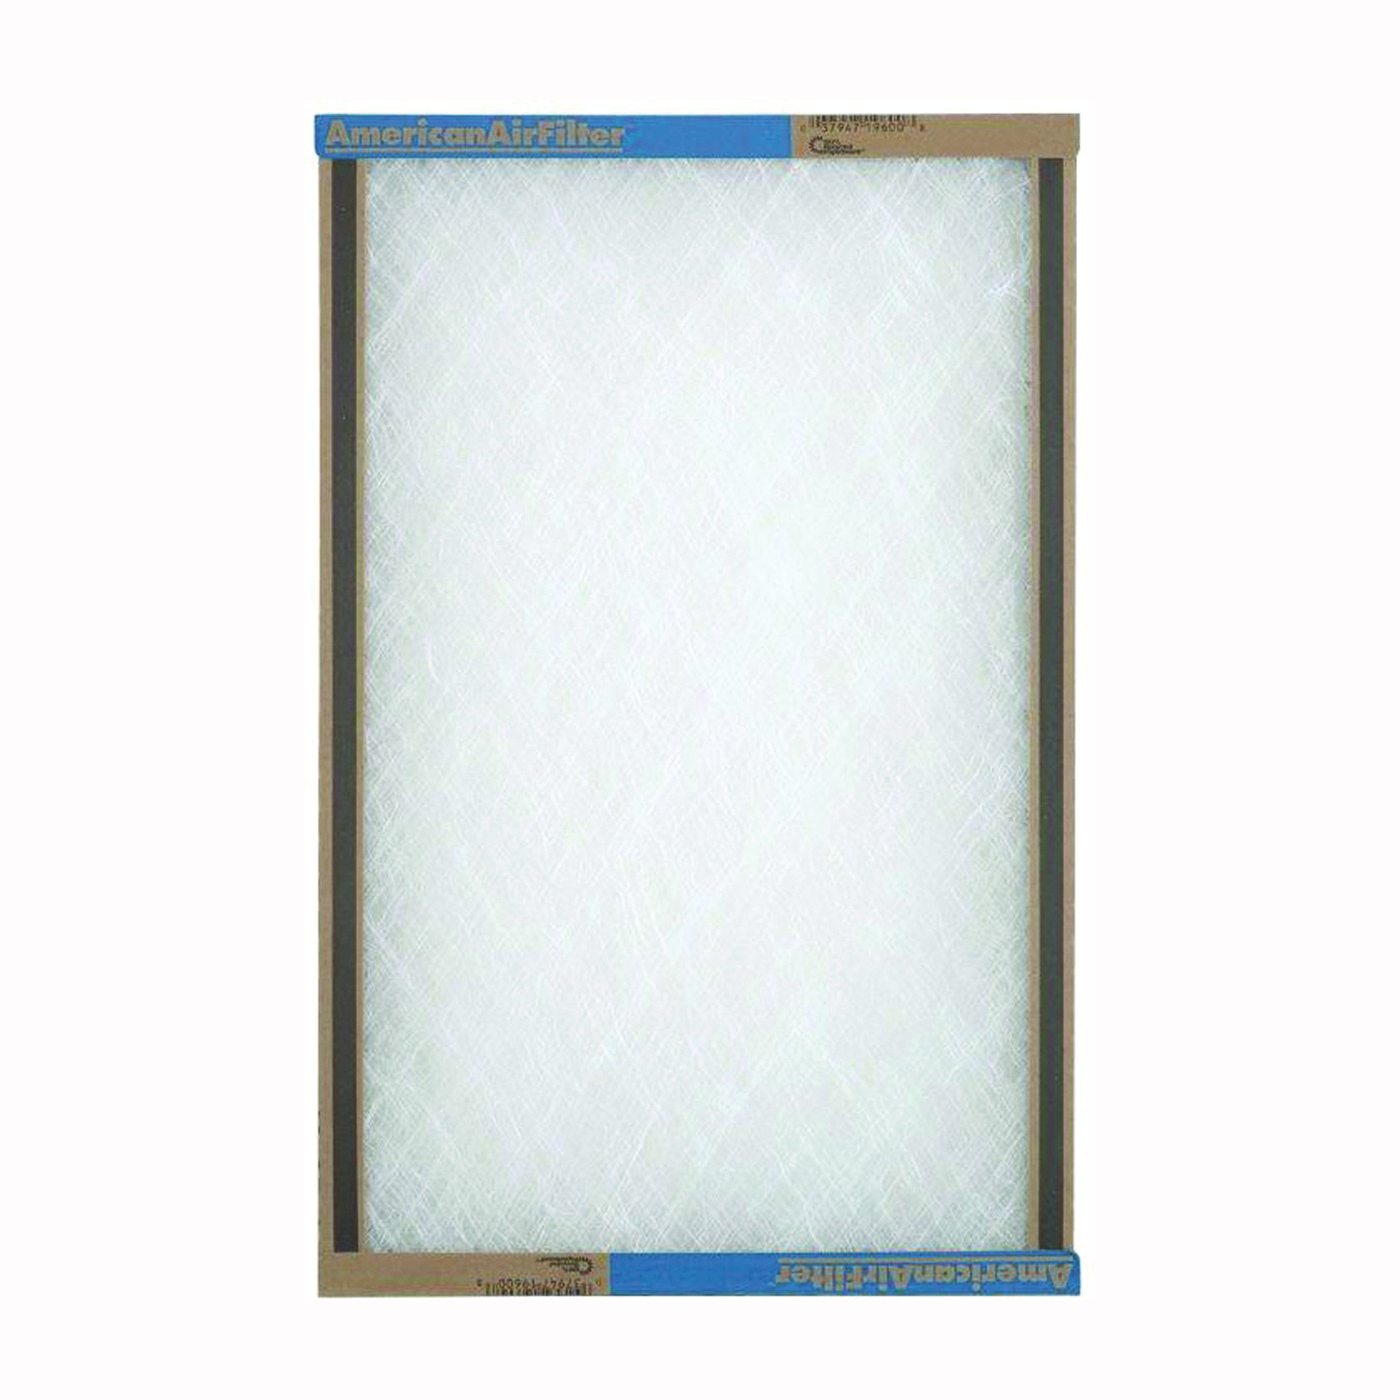 114201 Panel Air Filter, 20 x 14 x 1, Chipboard Frame